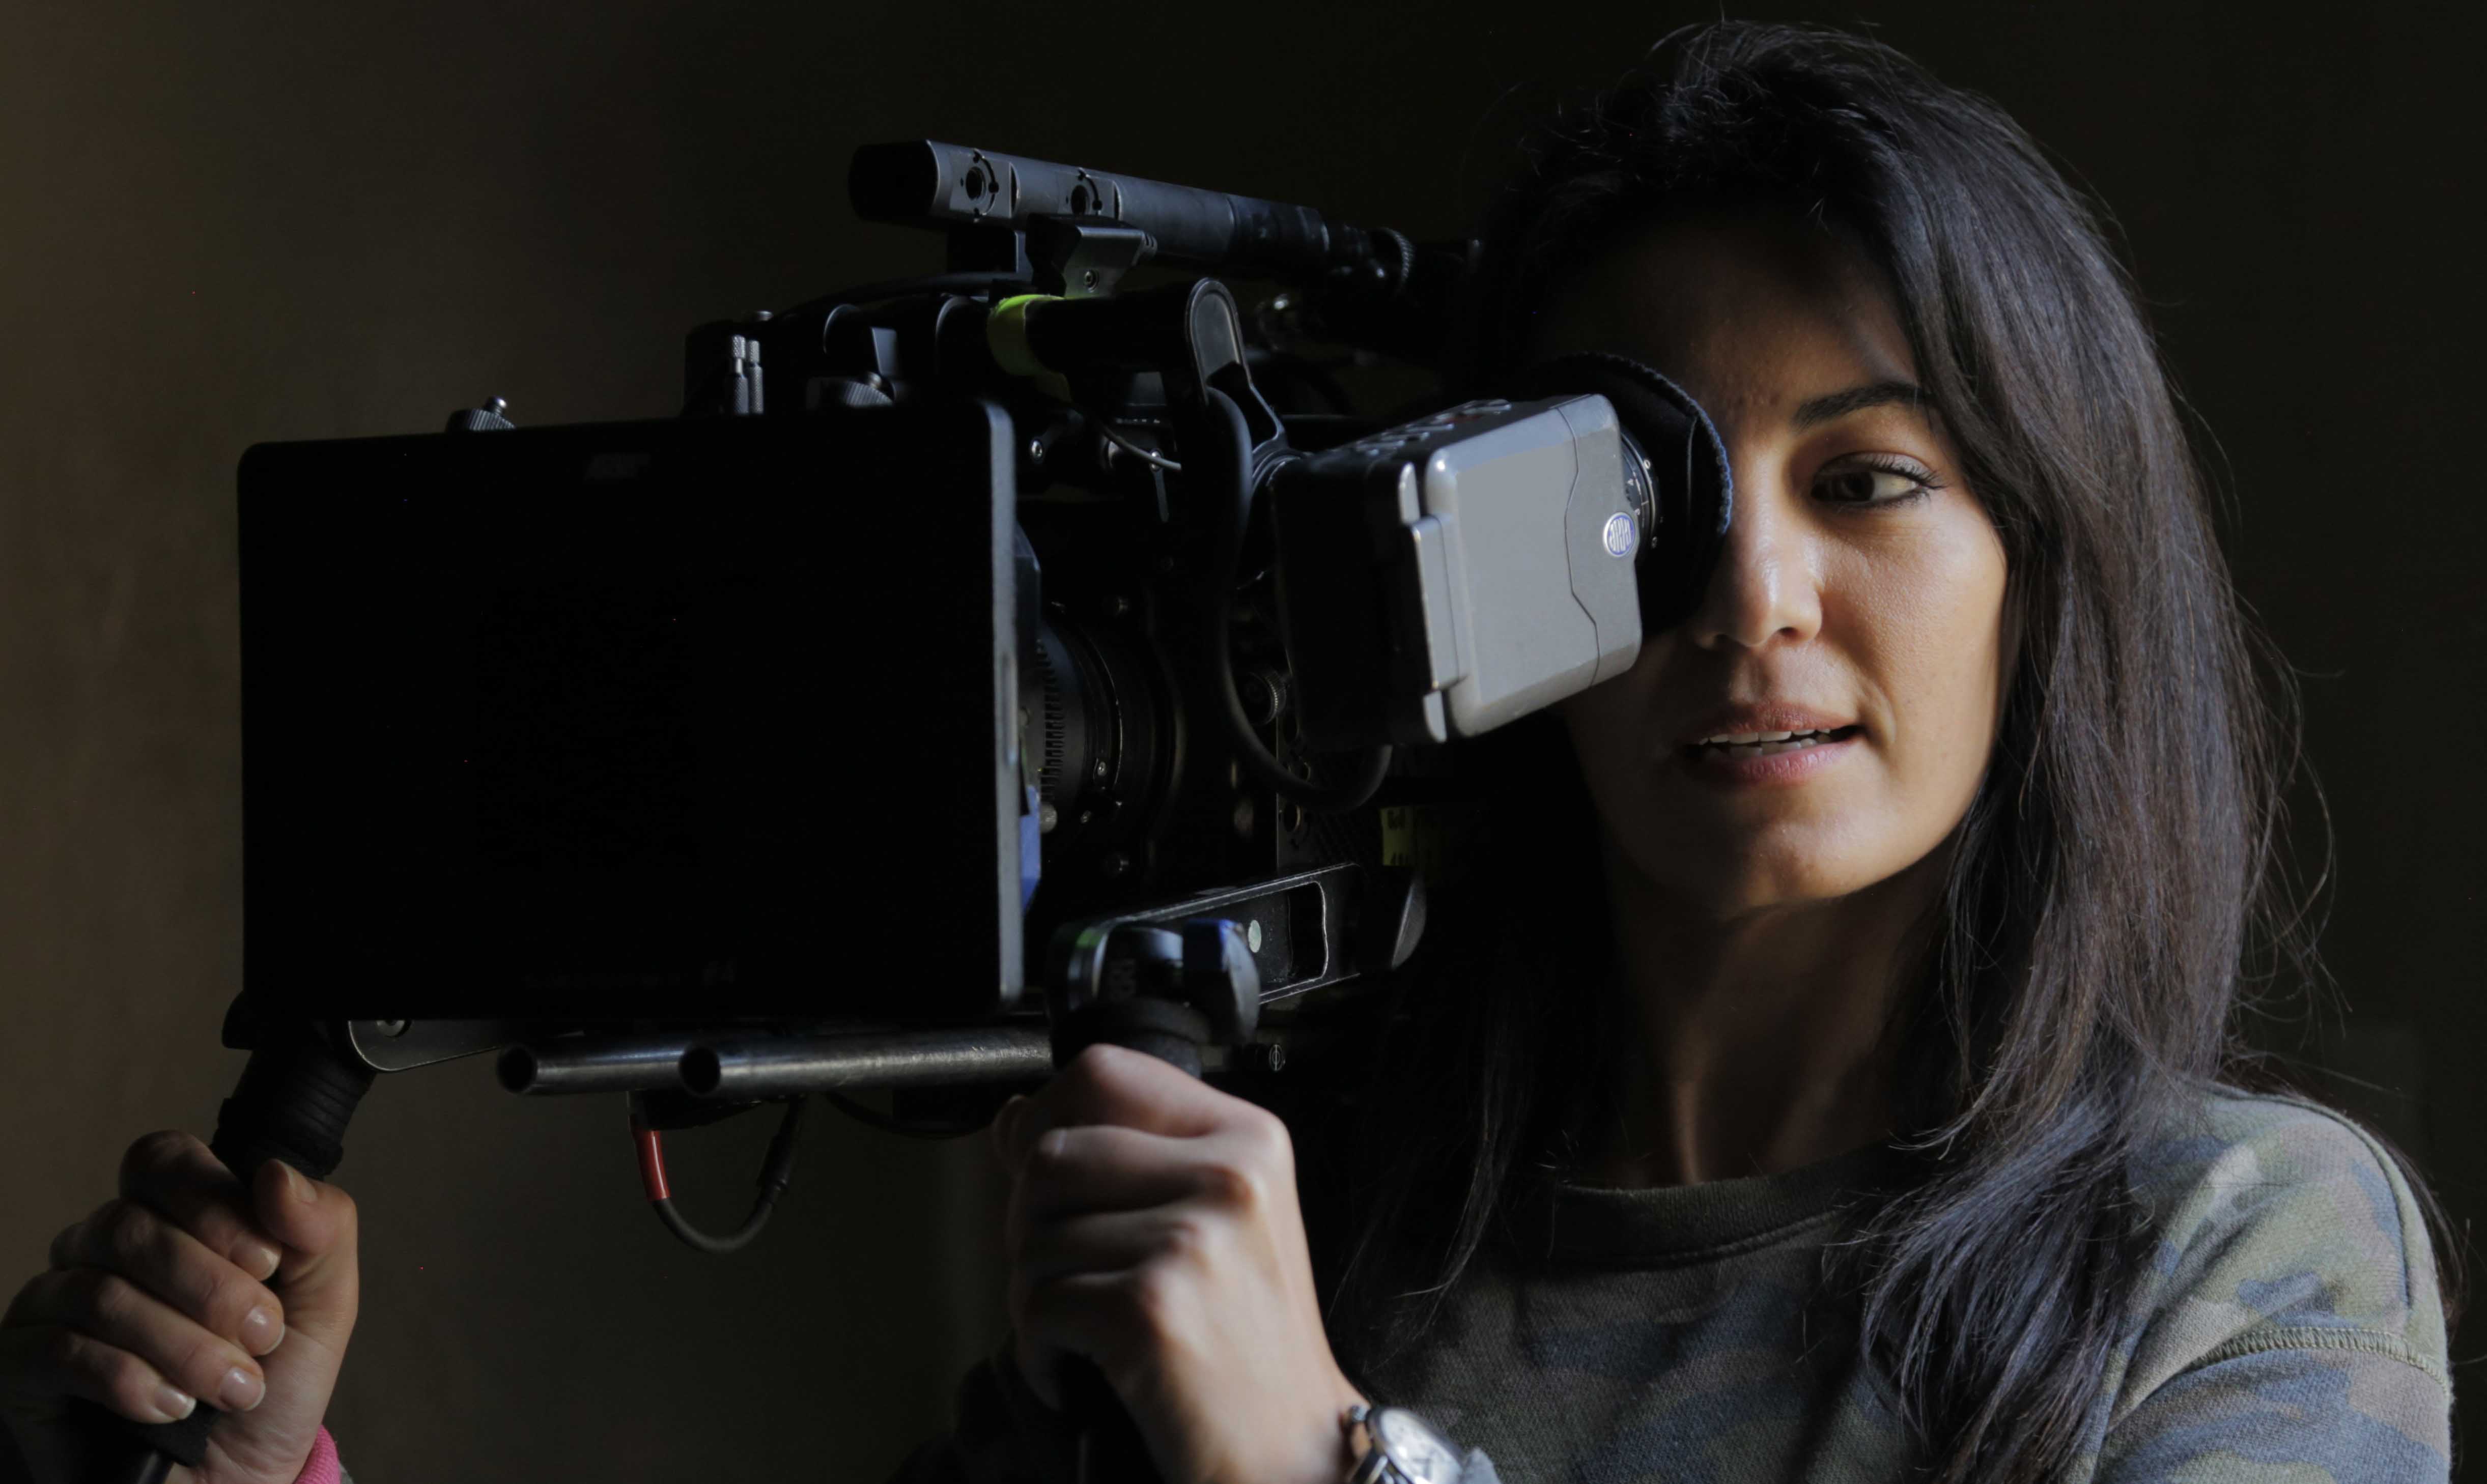 ‘The Blue Caftan’ Director Maryam Touzani to Make Spanish-Language Debut With ‘Calle Malaga’ (EXCLUSIVE)